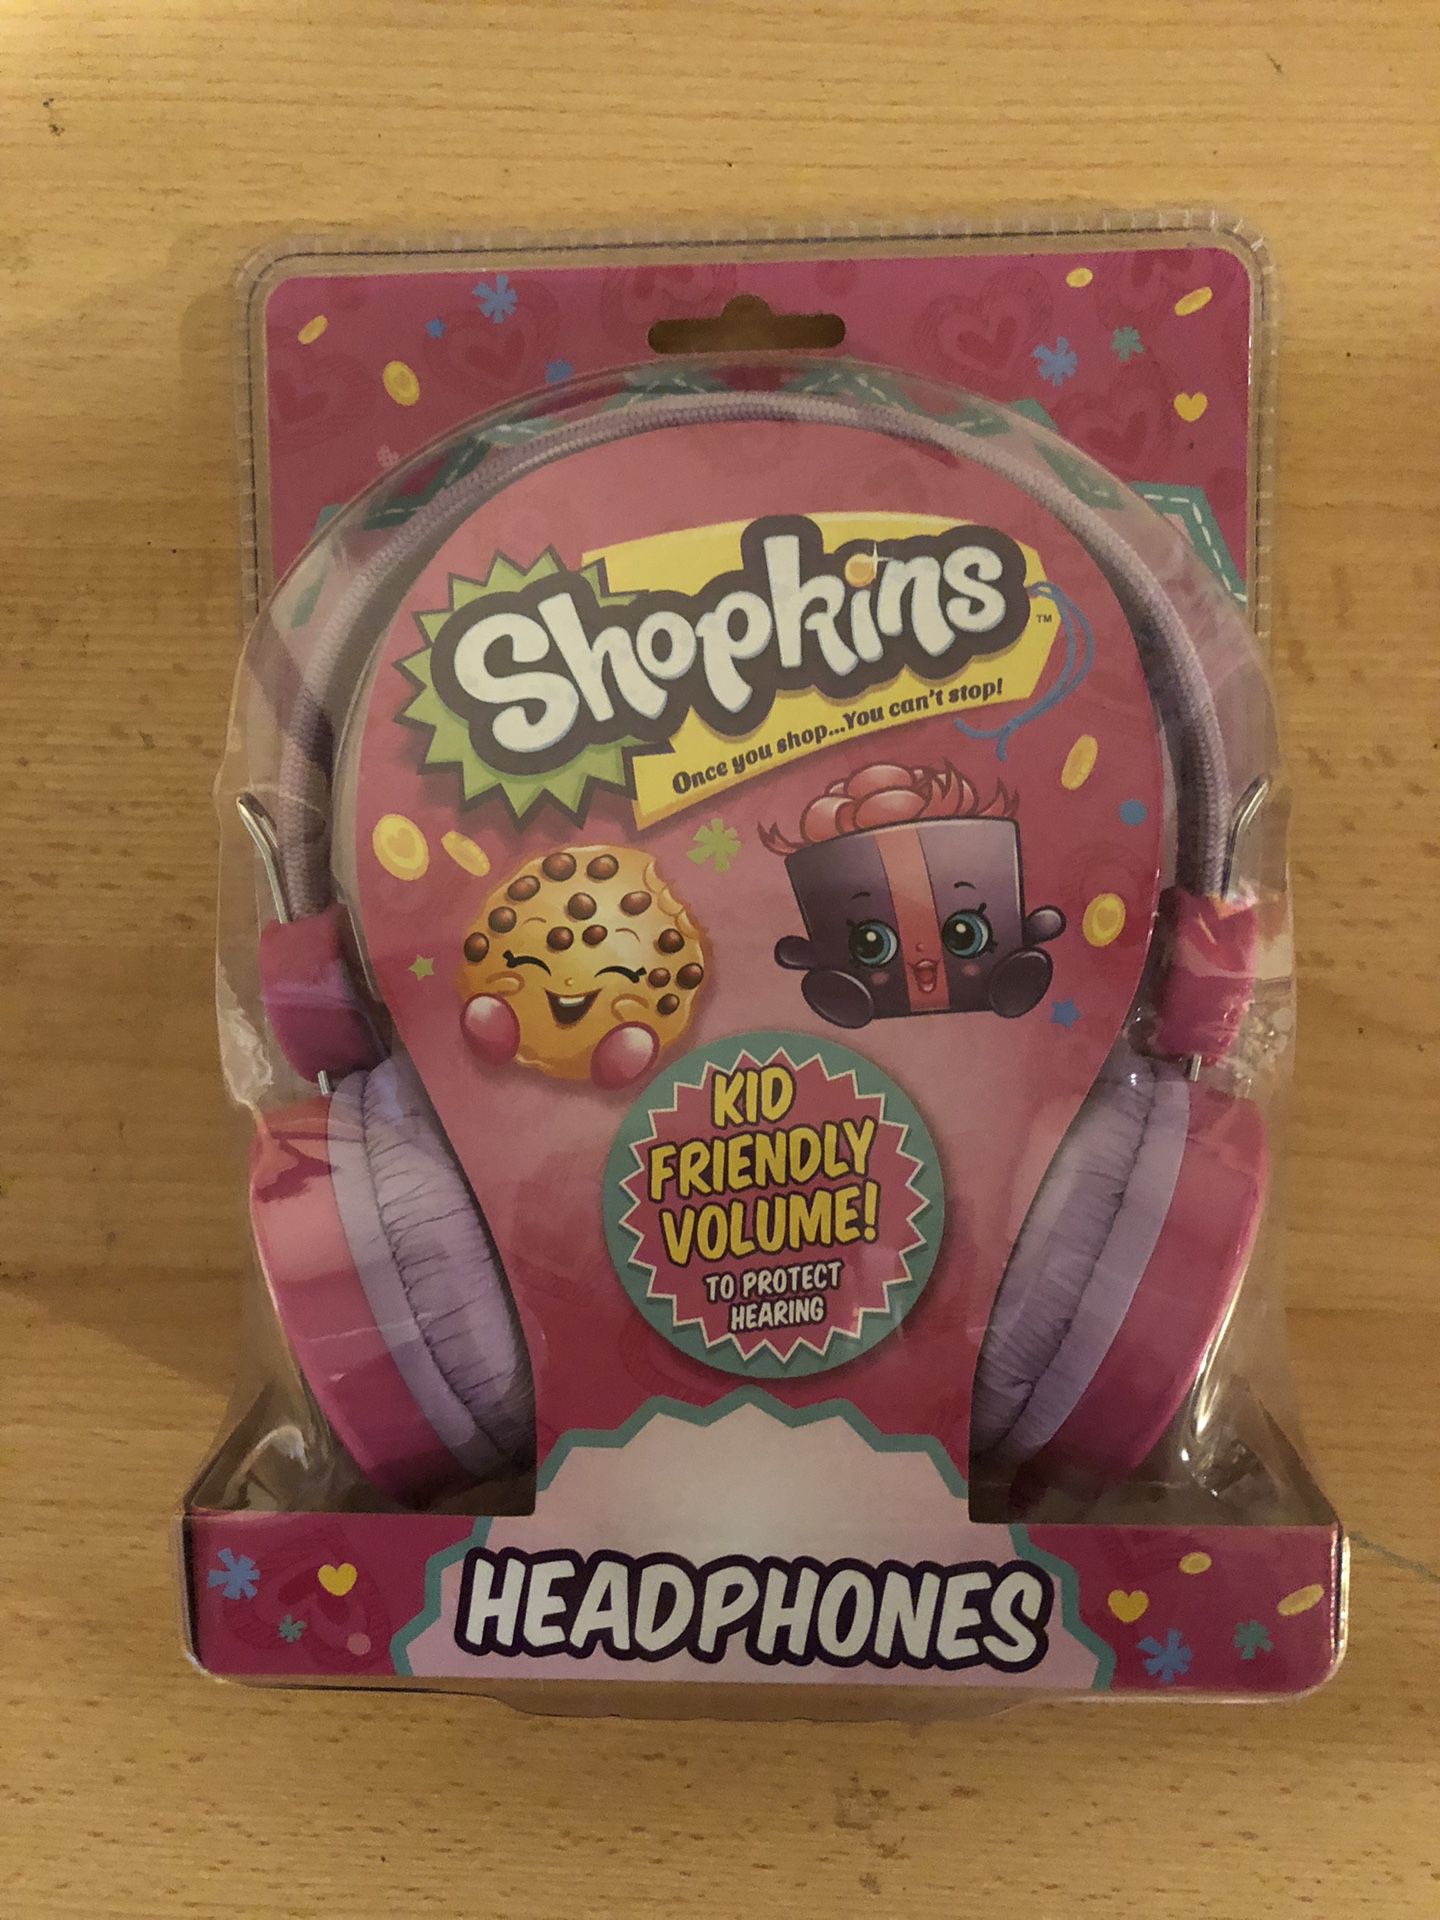 Shopkins headphones